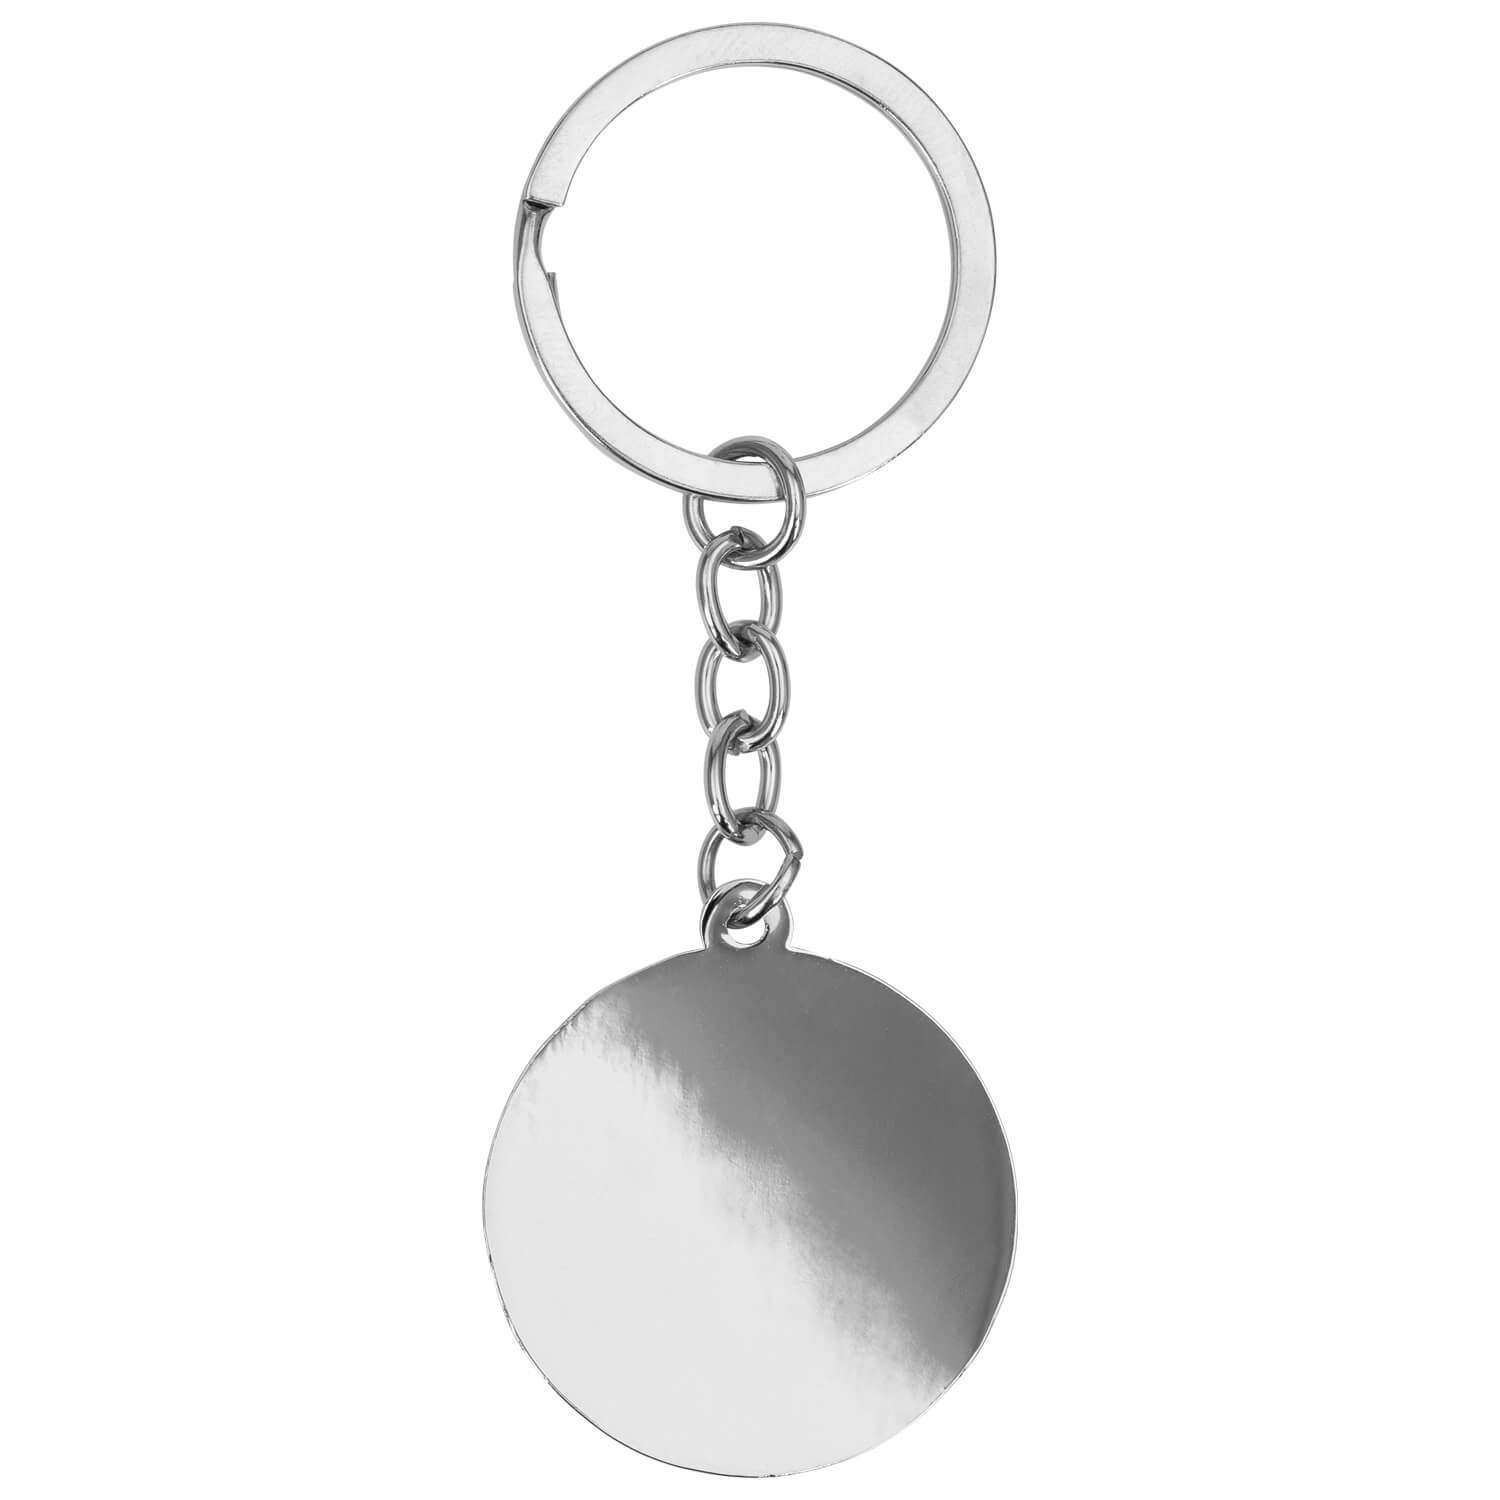 Bild 2: Schlüsselanhänger Logo ot